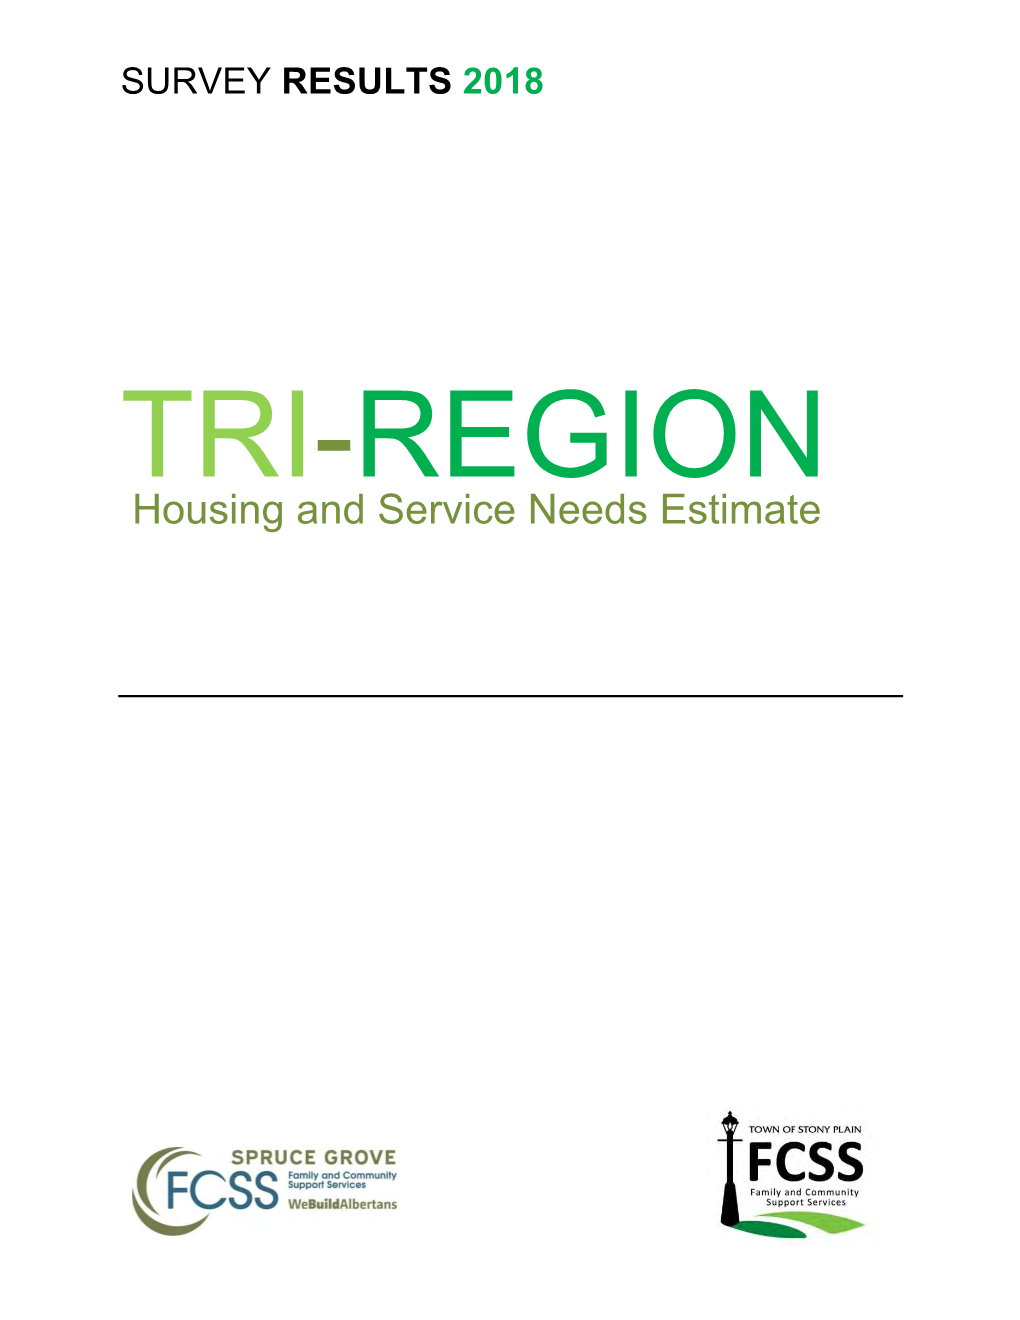 Tri-Region Housing and Needs Estimate